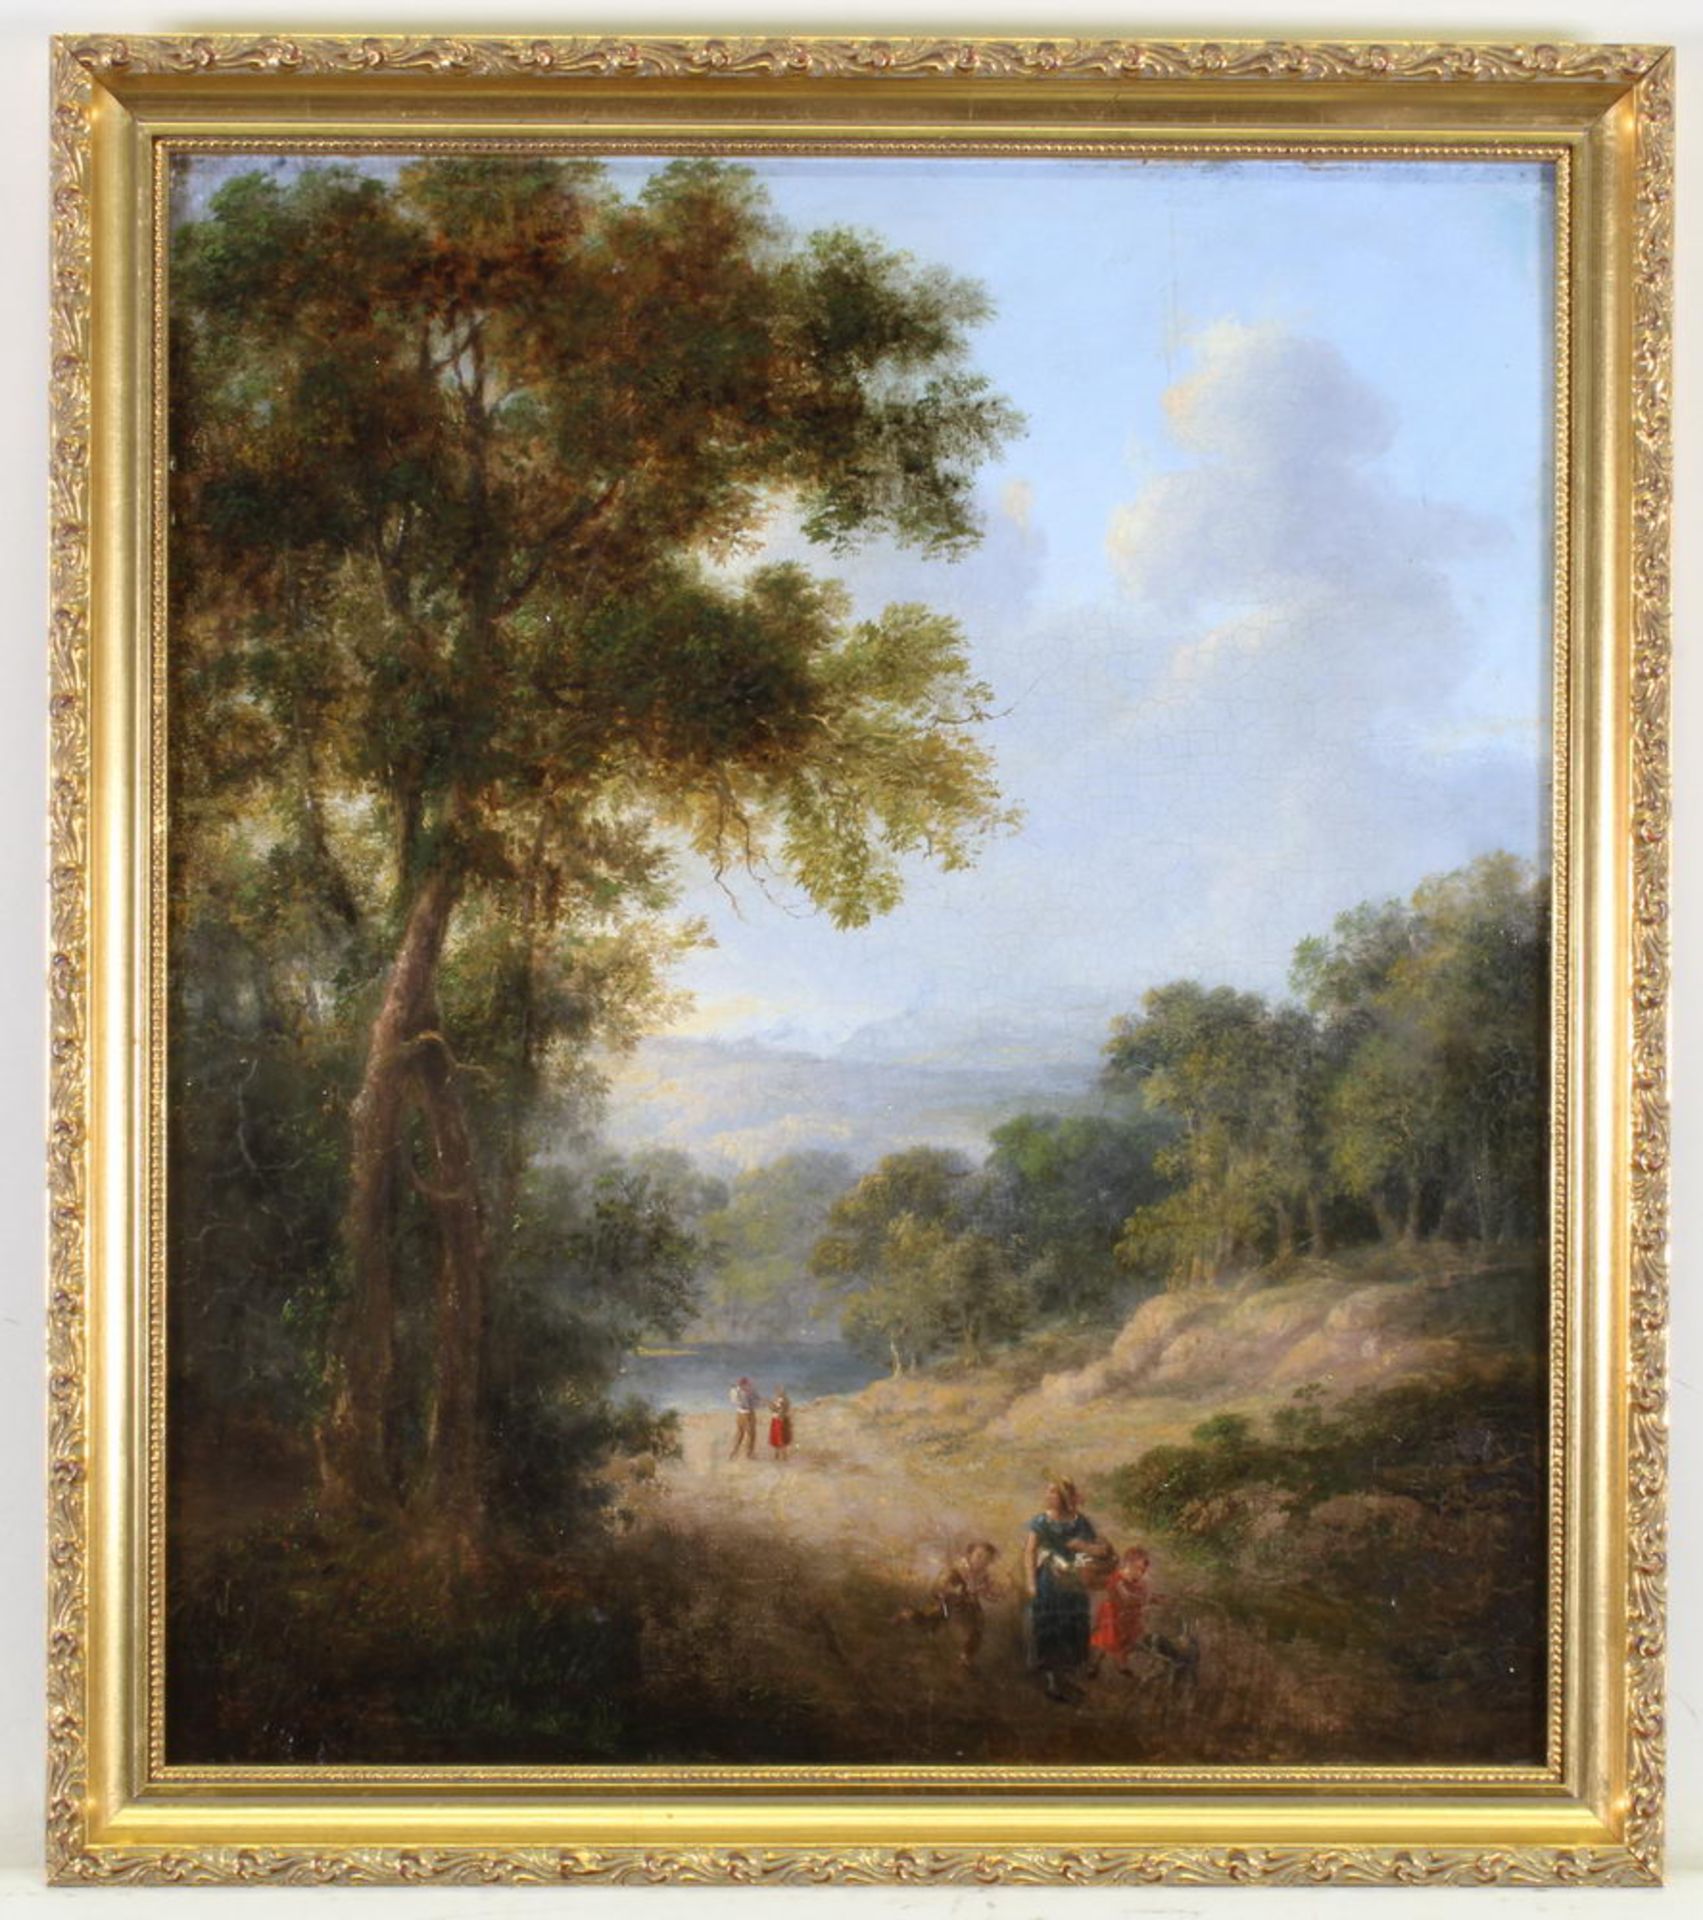 Landschaftsmaler (19. Jh.), "Personen in Seelandschaft", Öl auf Platte, 37 x 32 cm (R.A), Retusche - Image 2 of 2